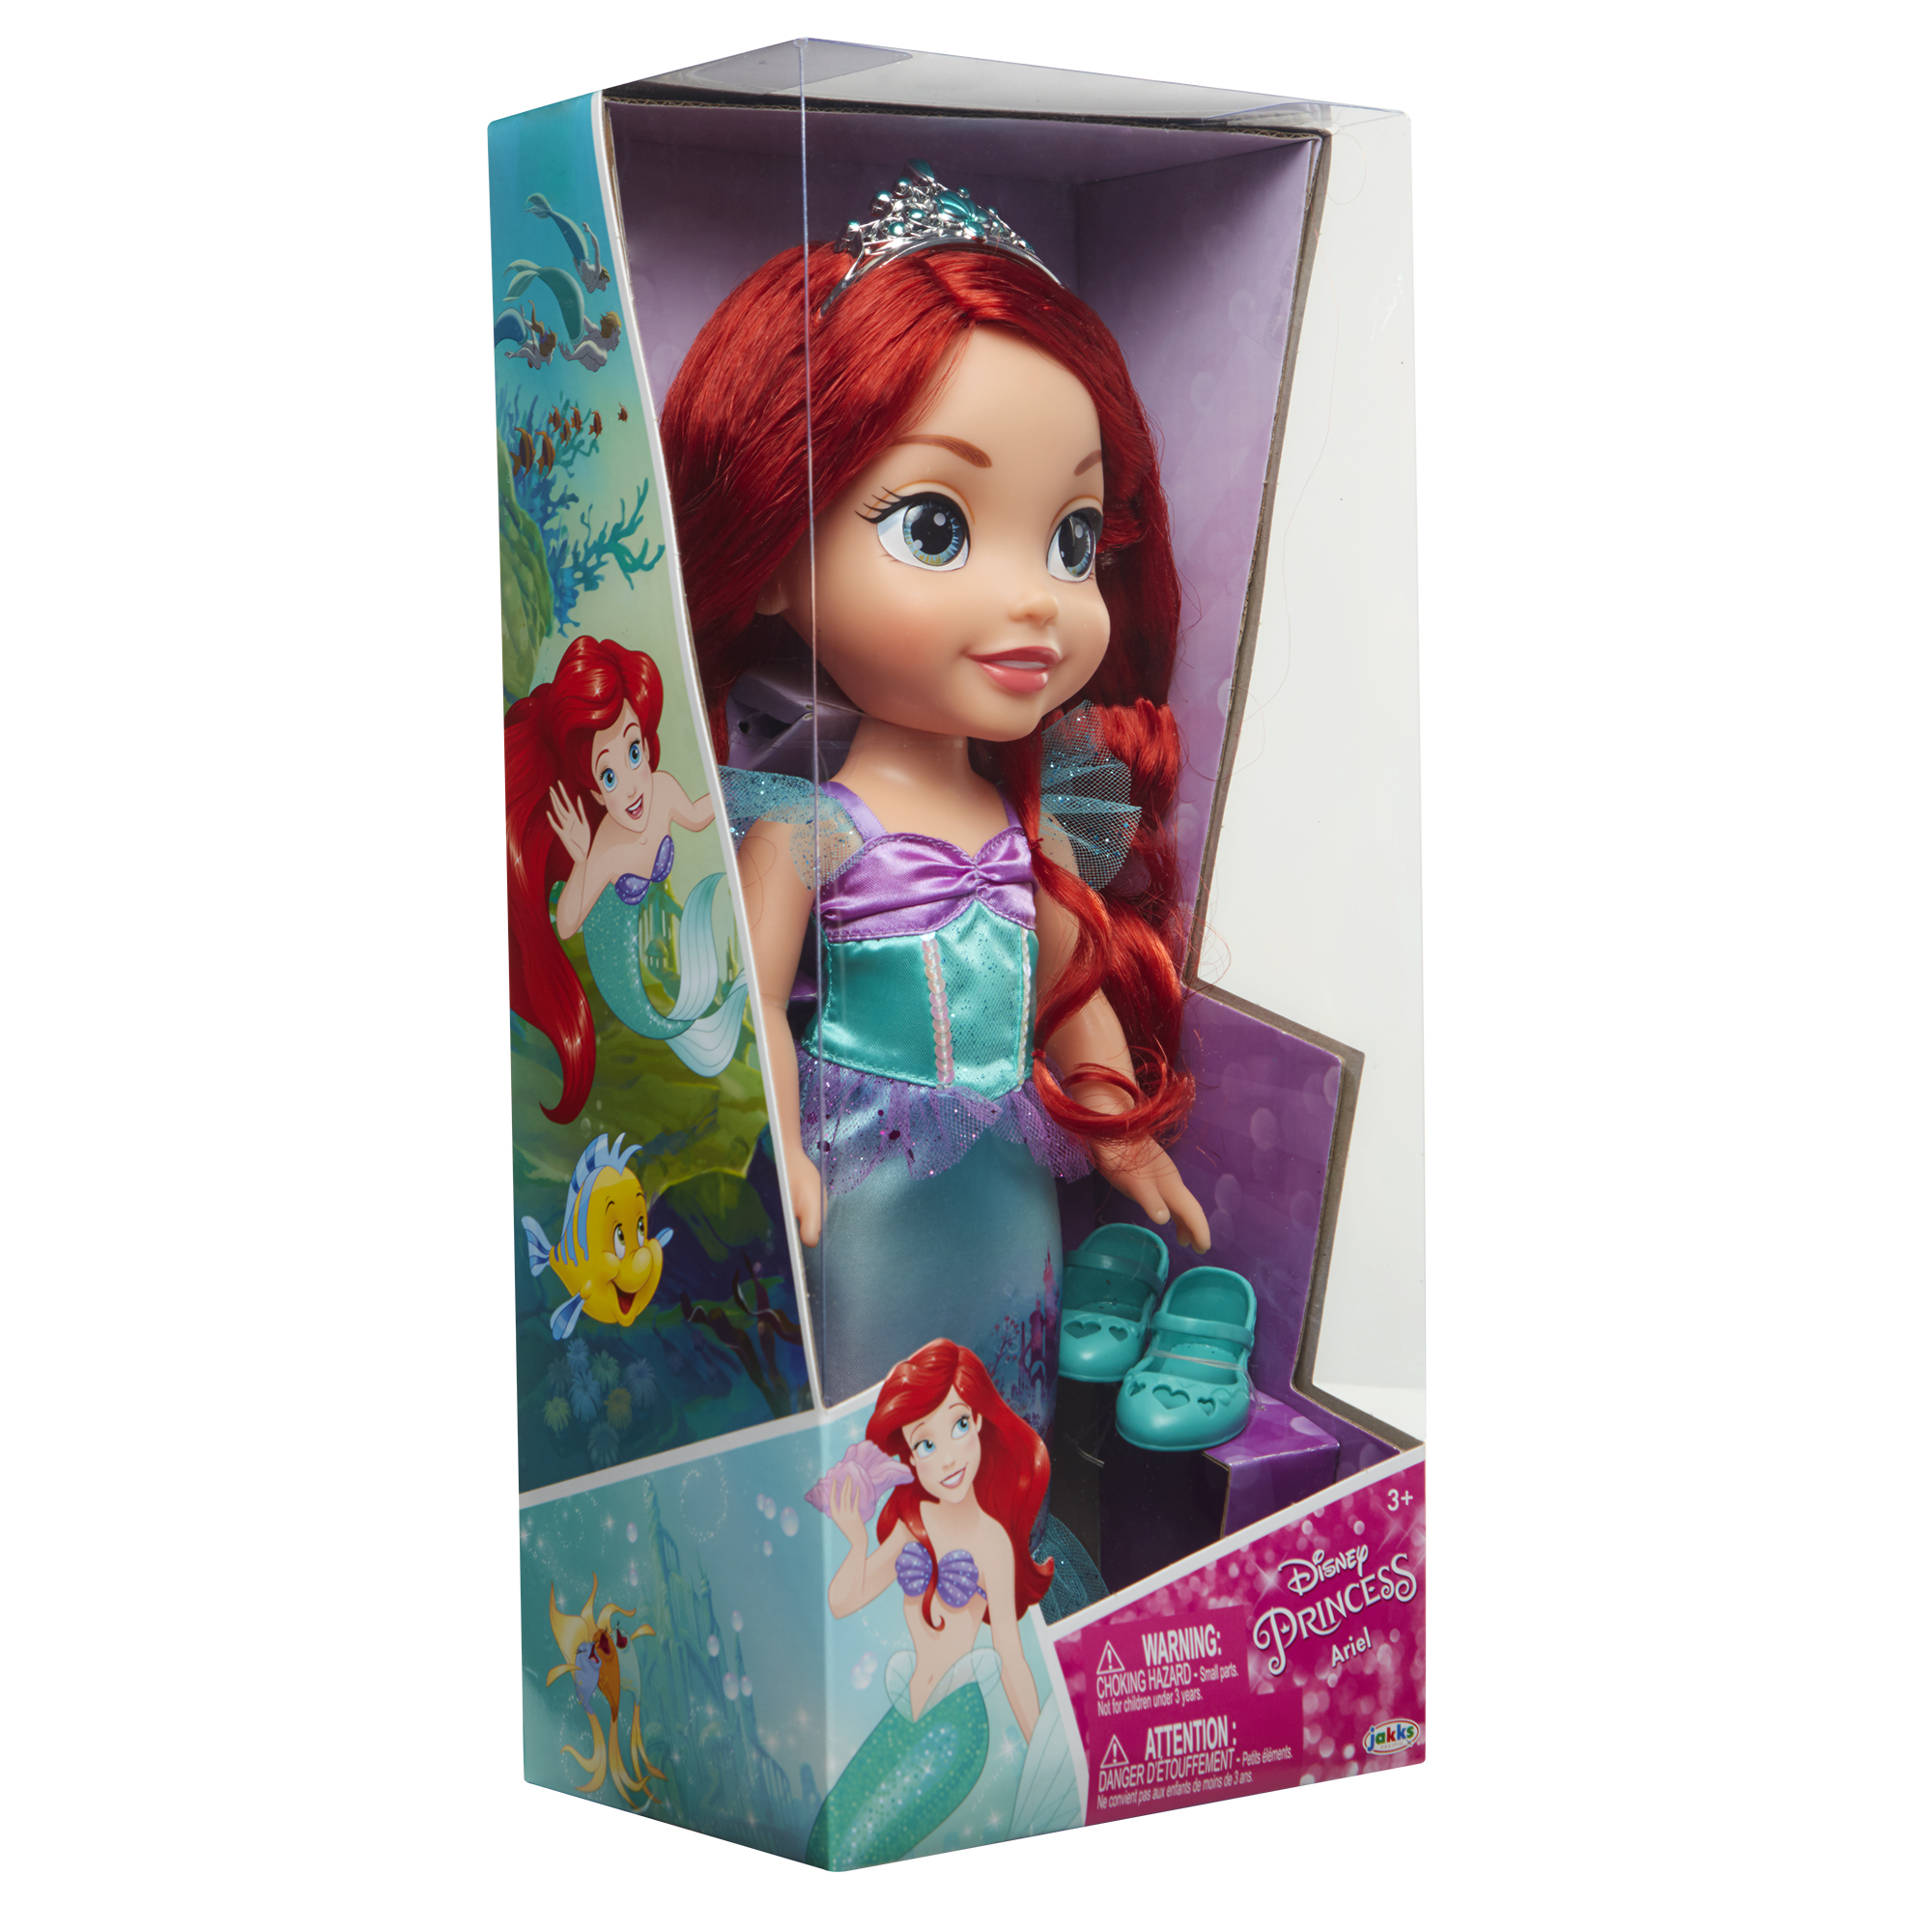 Disney Princess Explore Your World Ariel Large Fashion Doll - image 6 of 6